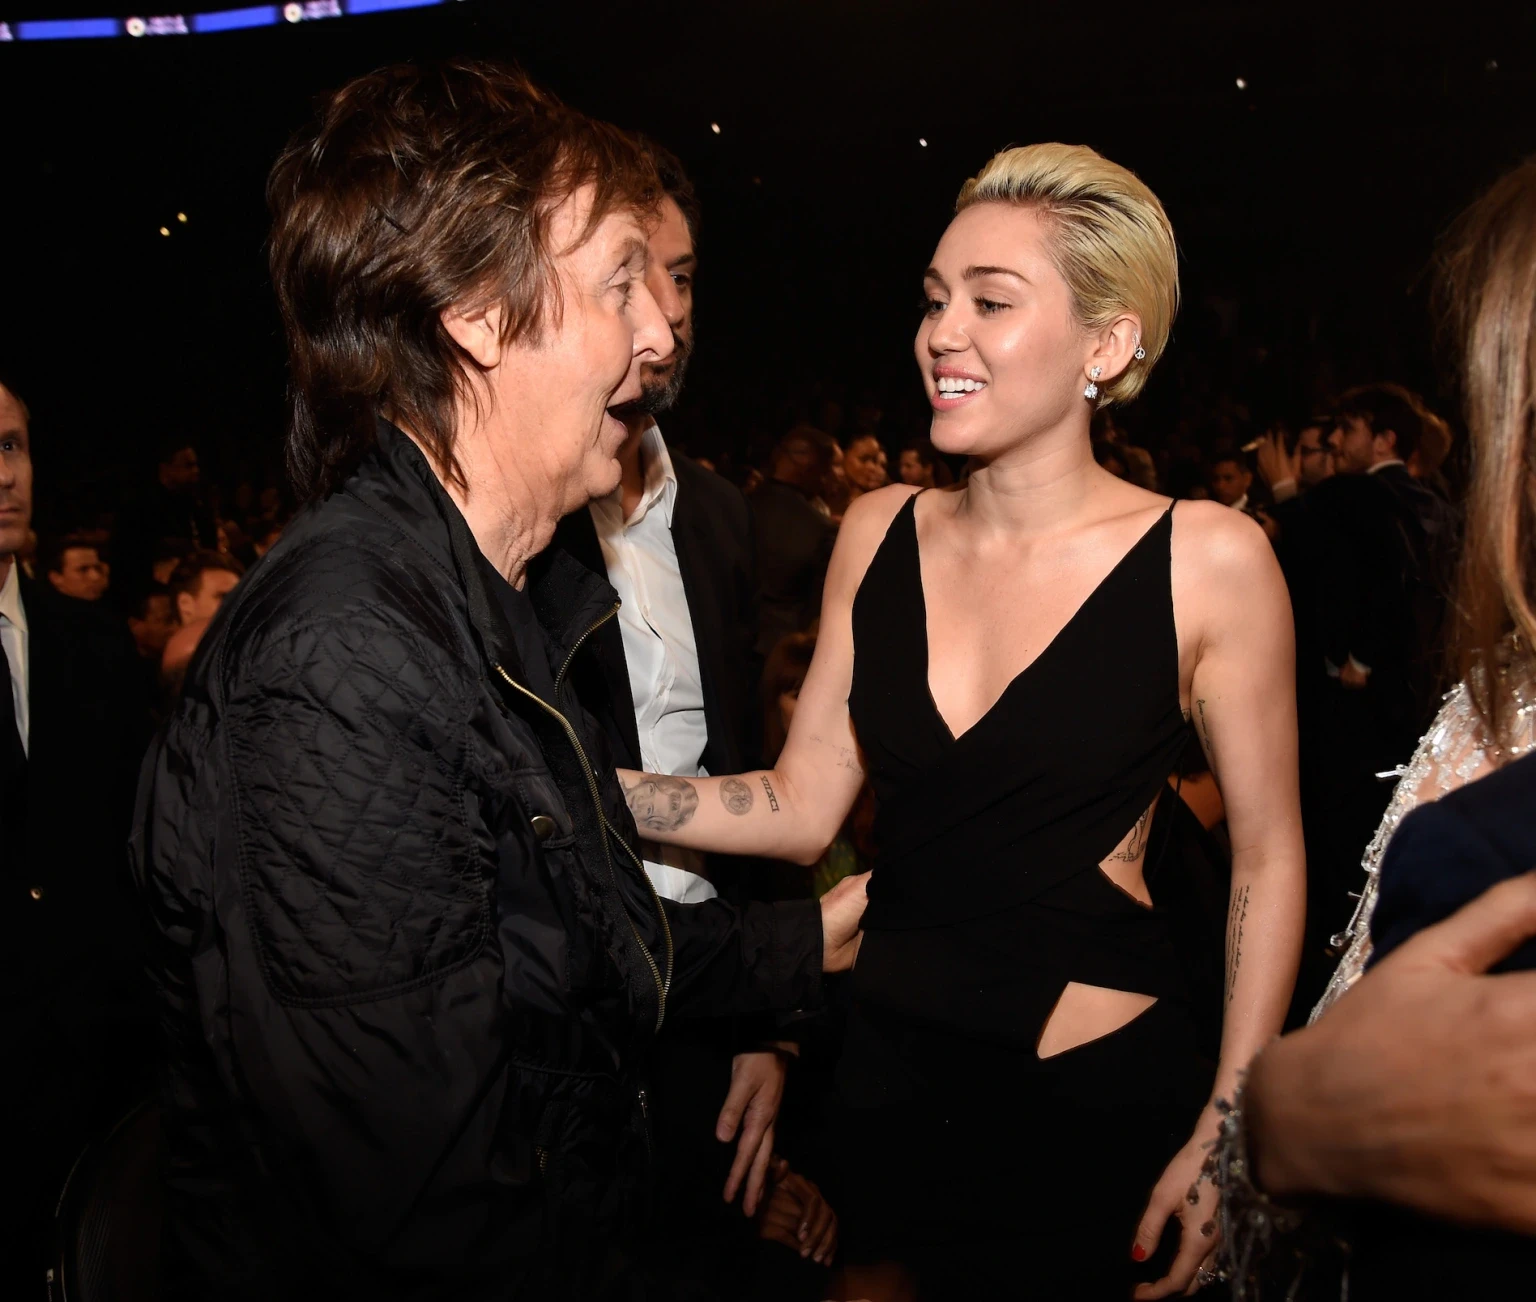 Paul McCartney and Miley Cyrus